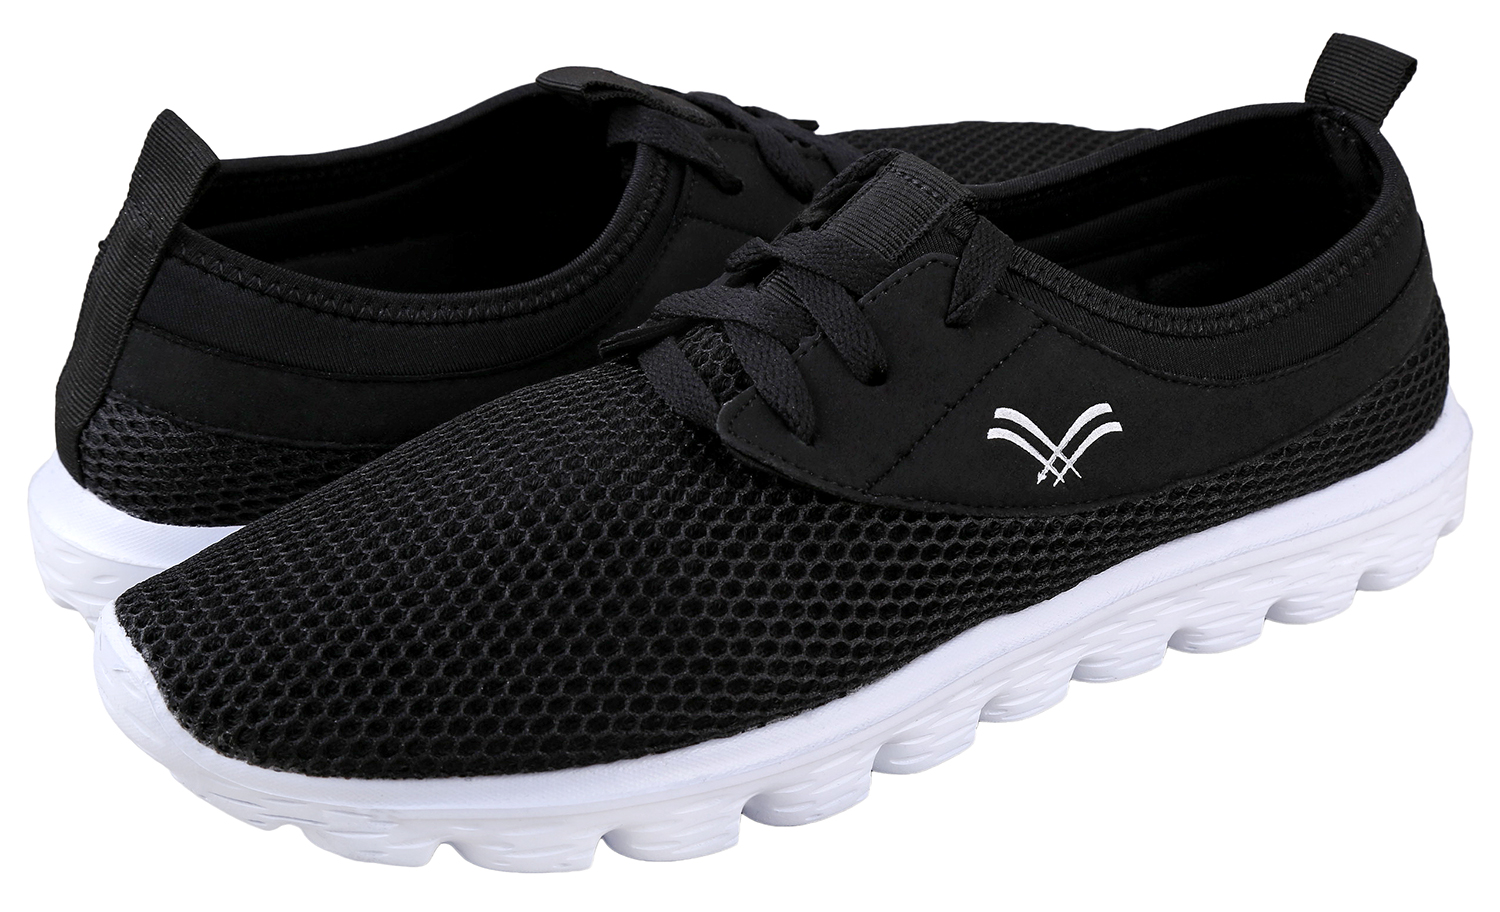 Urban Fox Men's Breeze Lightweight Shoes | Lightweight Shoes for Men | Casual Shoes | Walking Shoes for Men | Black/White 13 M US - image 3 of 7